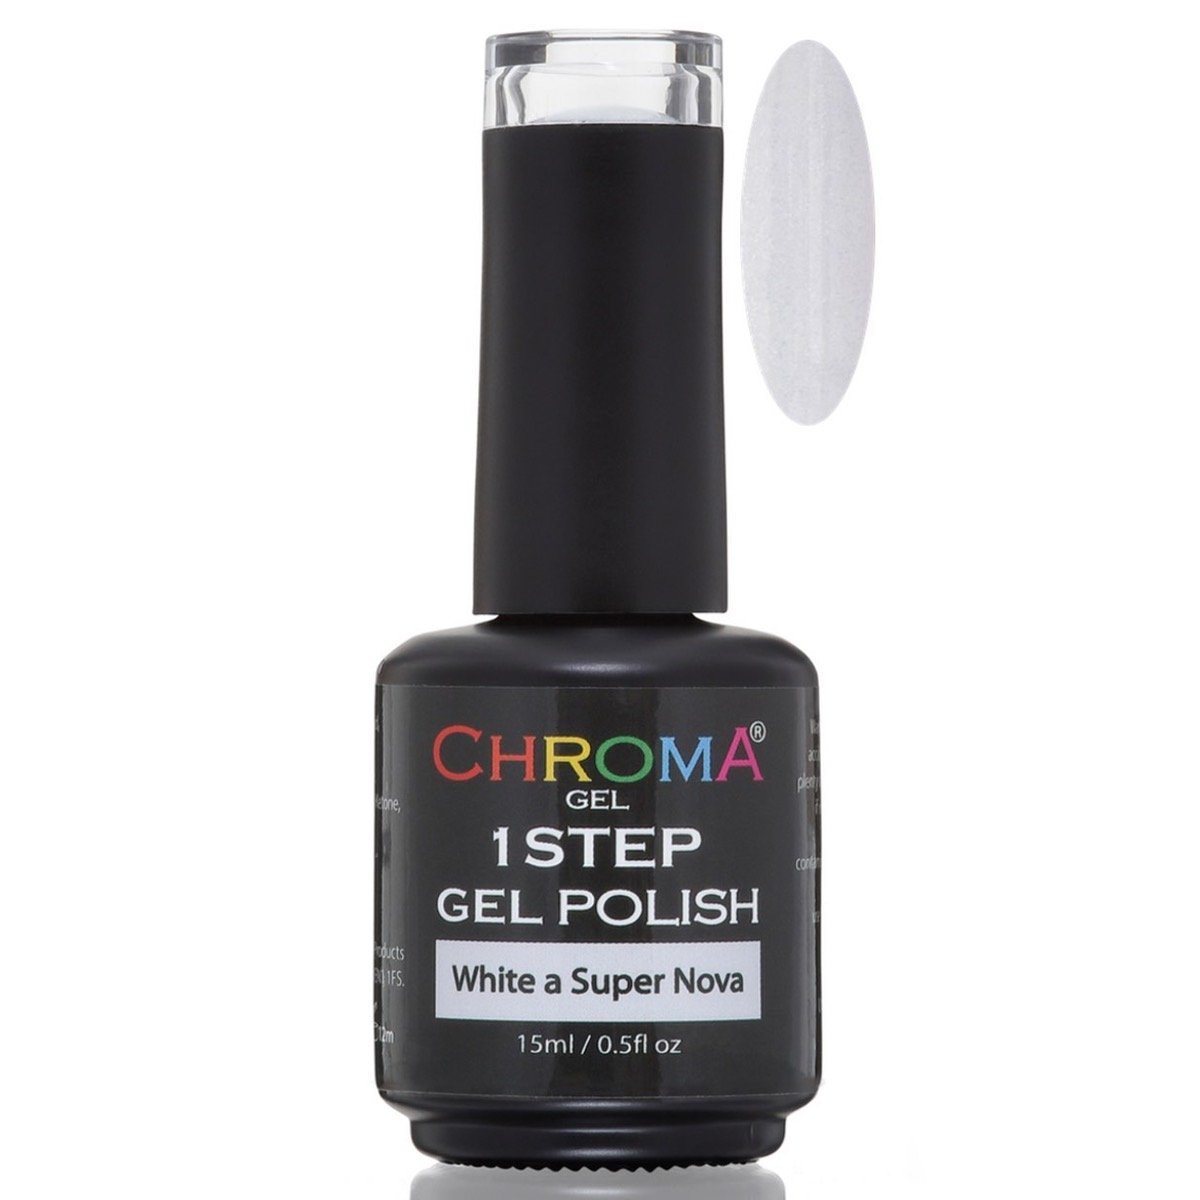 Chroma Gel 1 Step Gel Polish White a Super Nova No.71 - Beauty Hair Products LtdChroma Gel